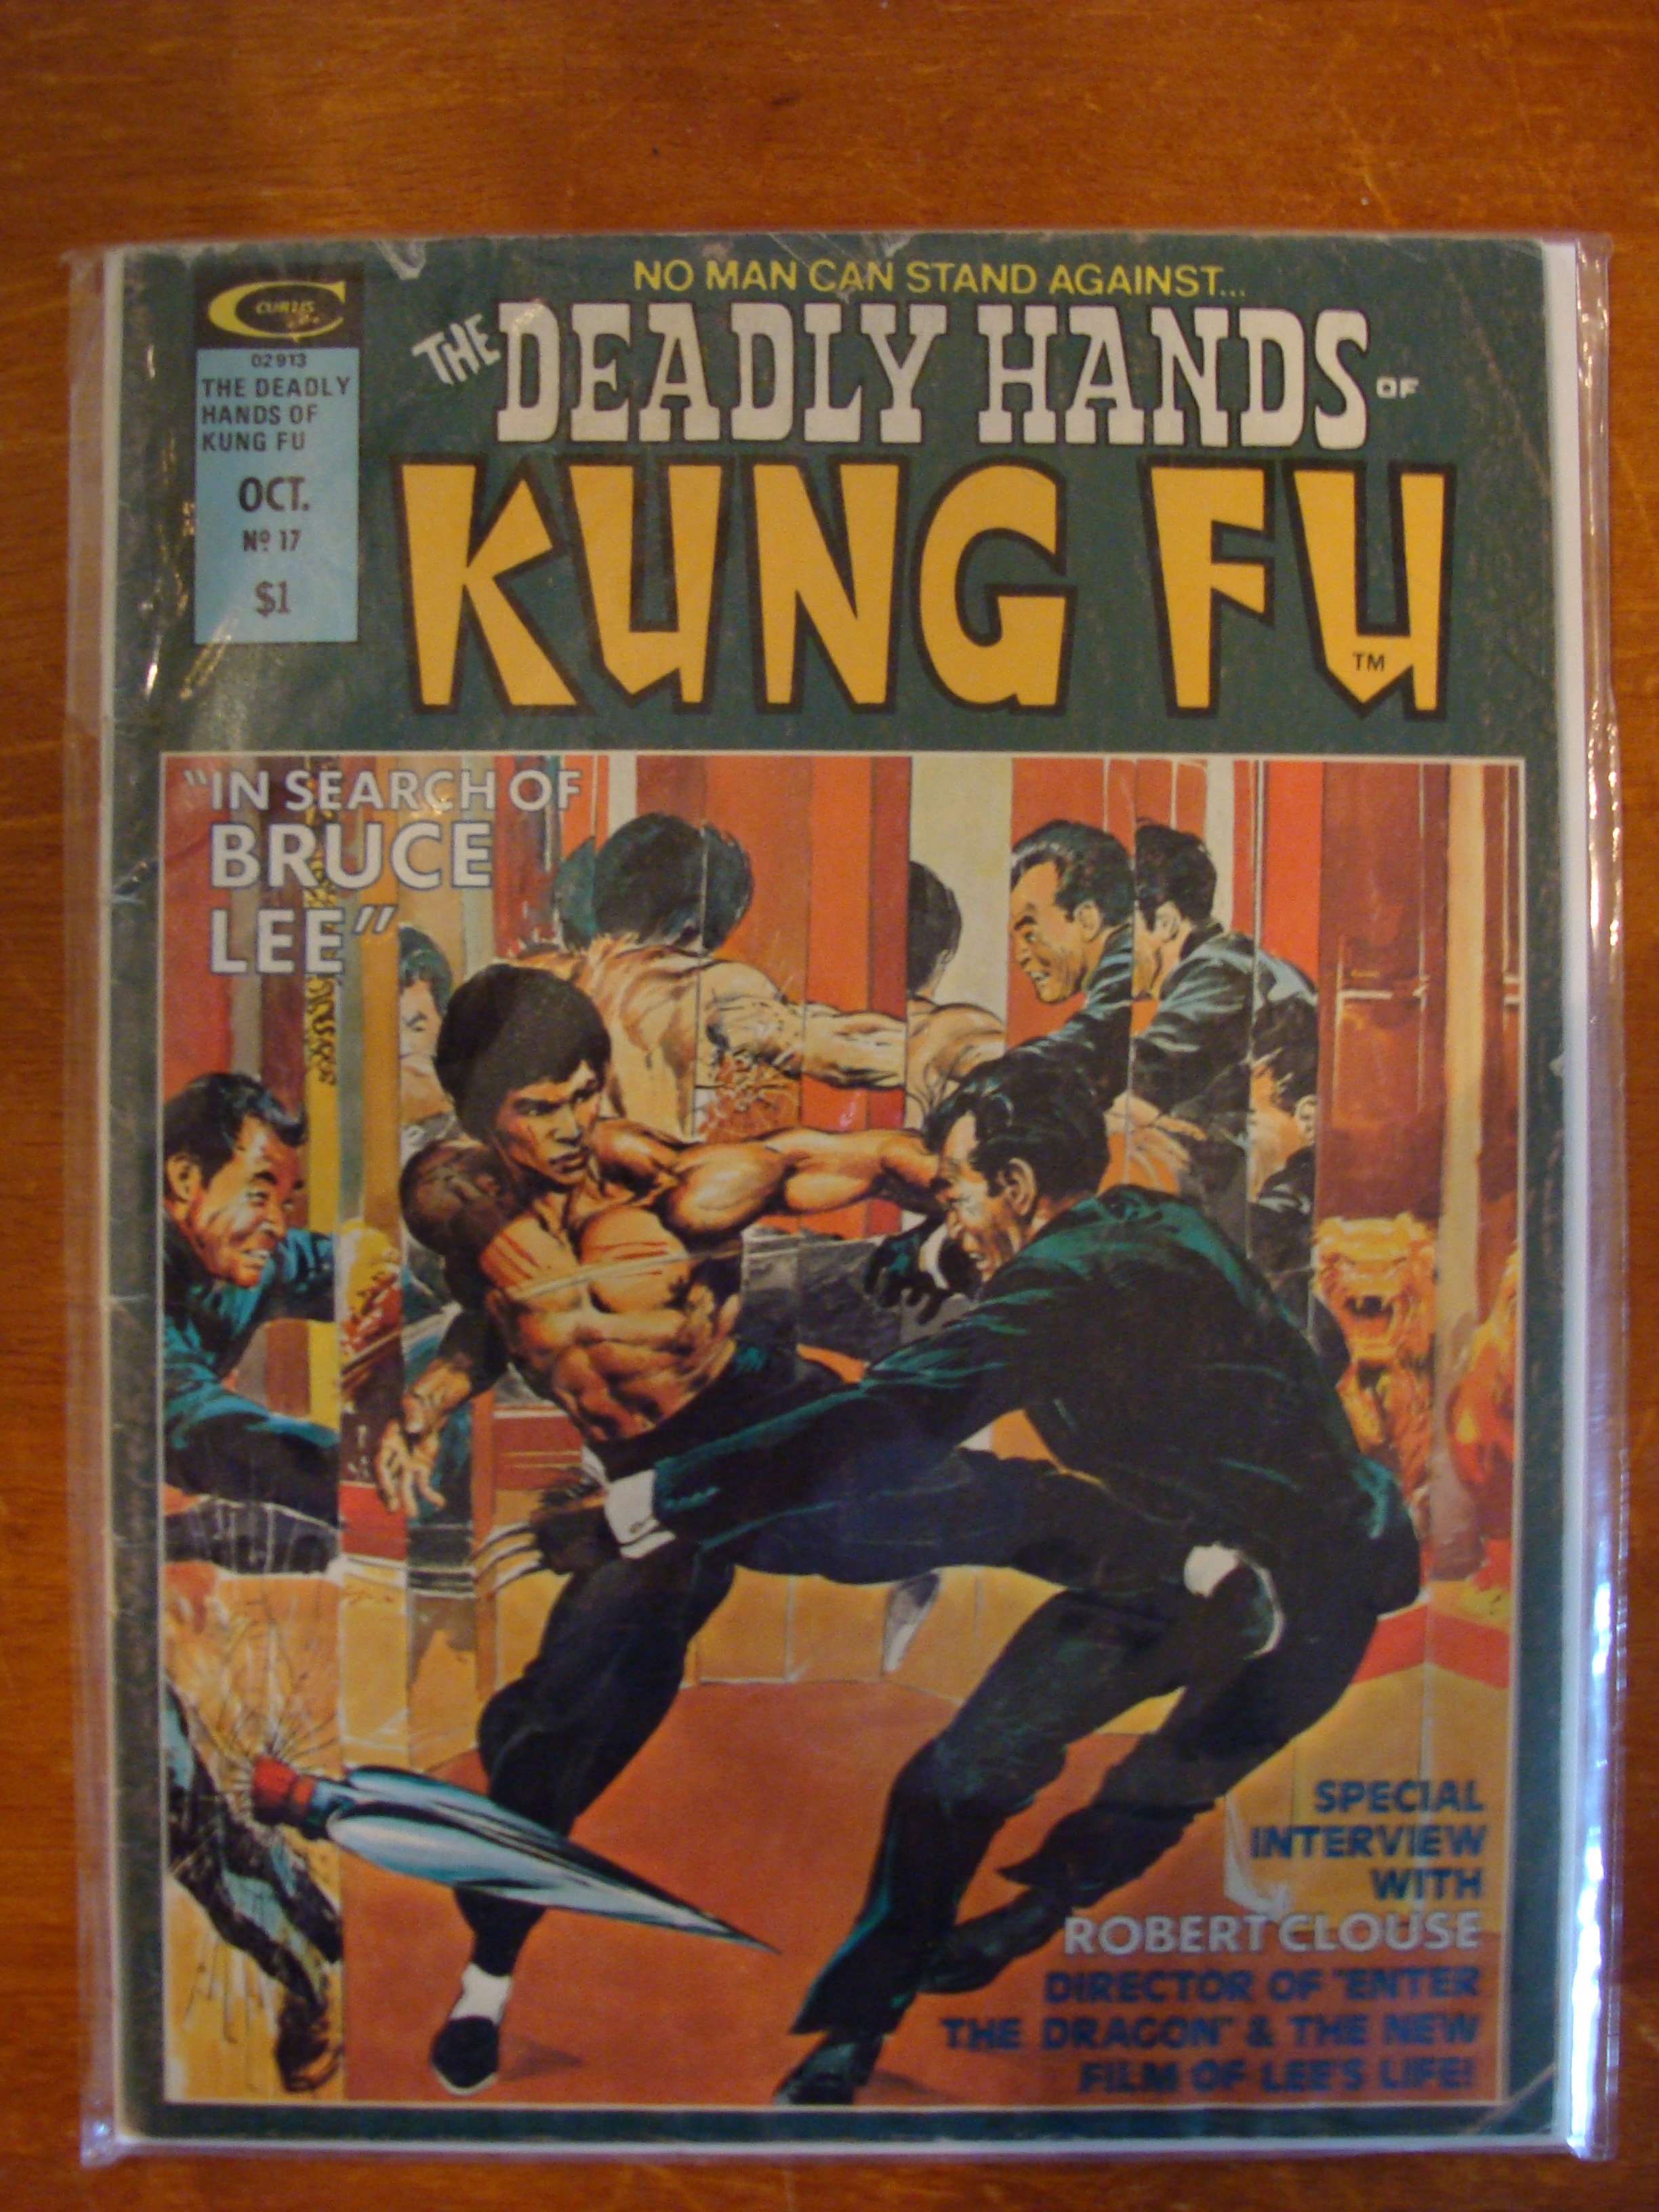 Old kung fu comic books